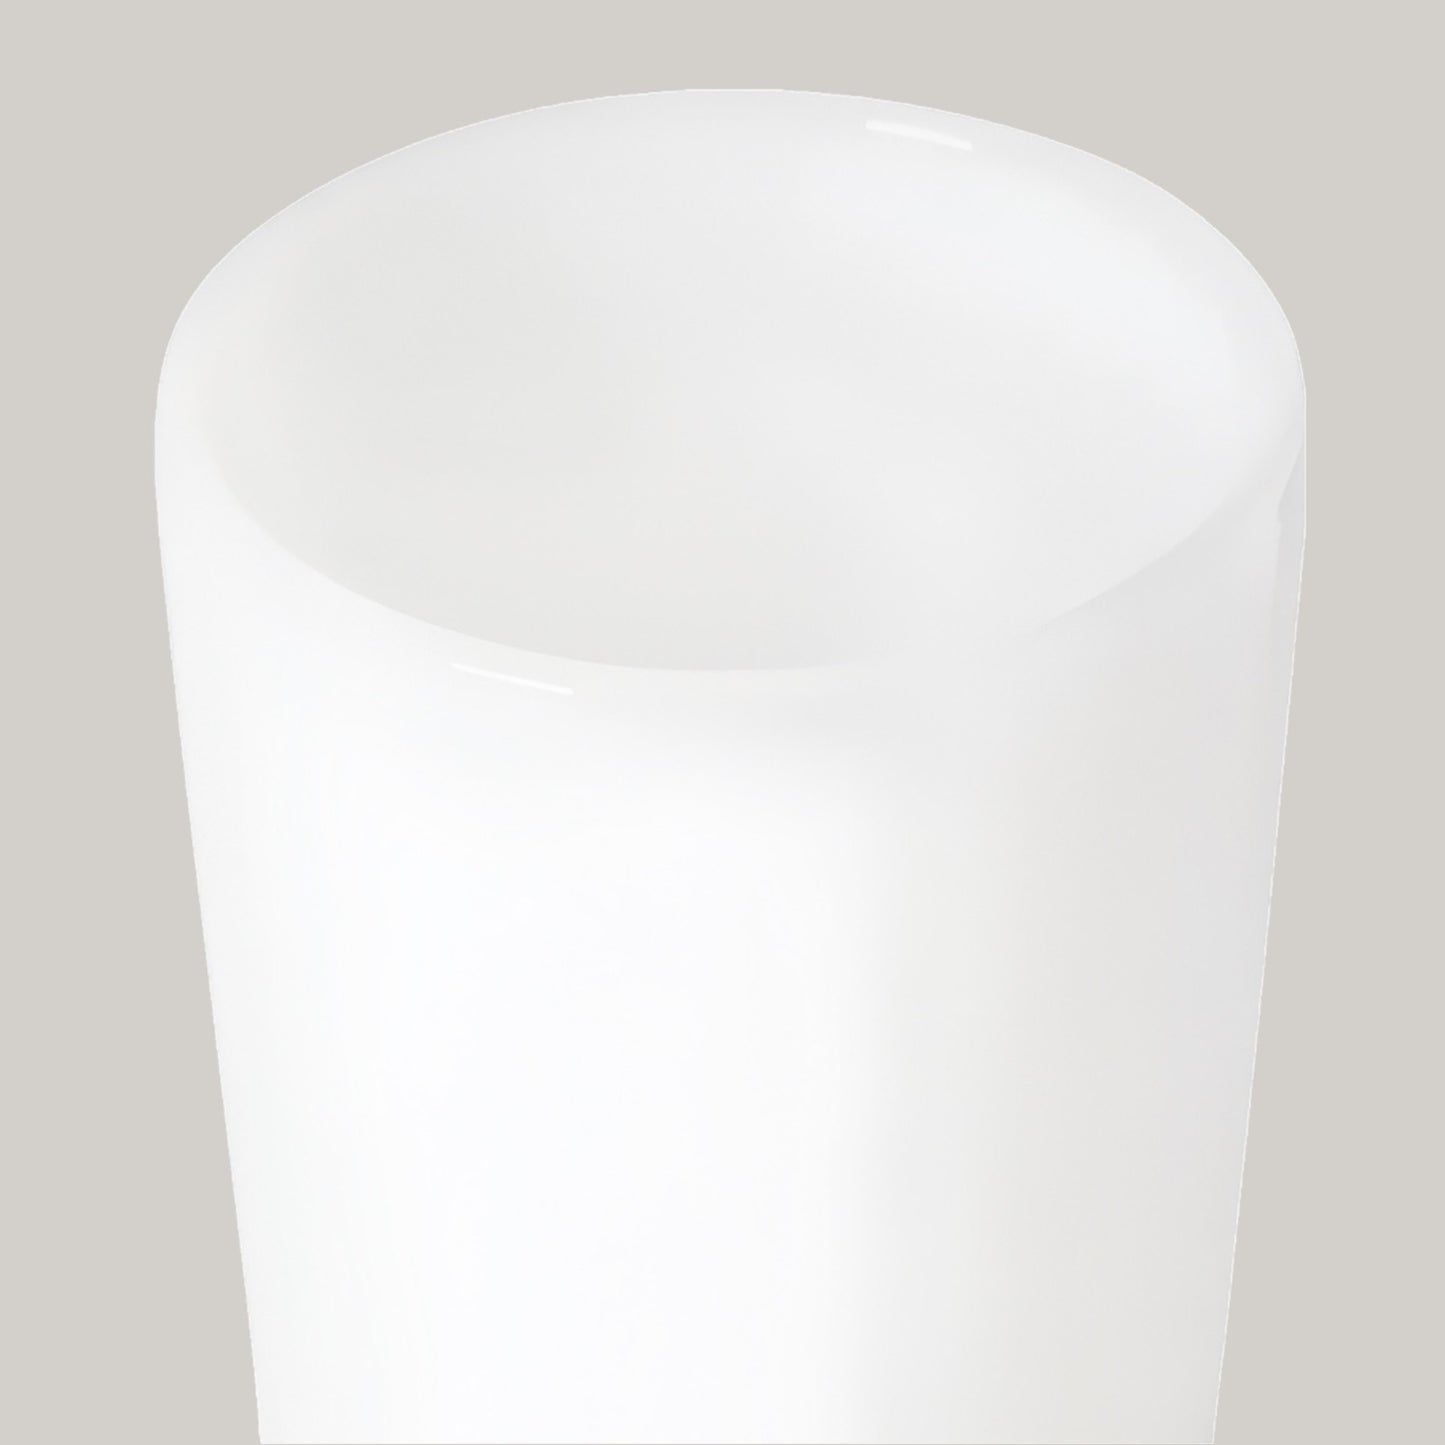 STUDIO MILLIGRAM GLASS CARAFE 1.25L - JADE WHITE